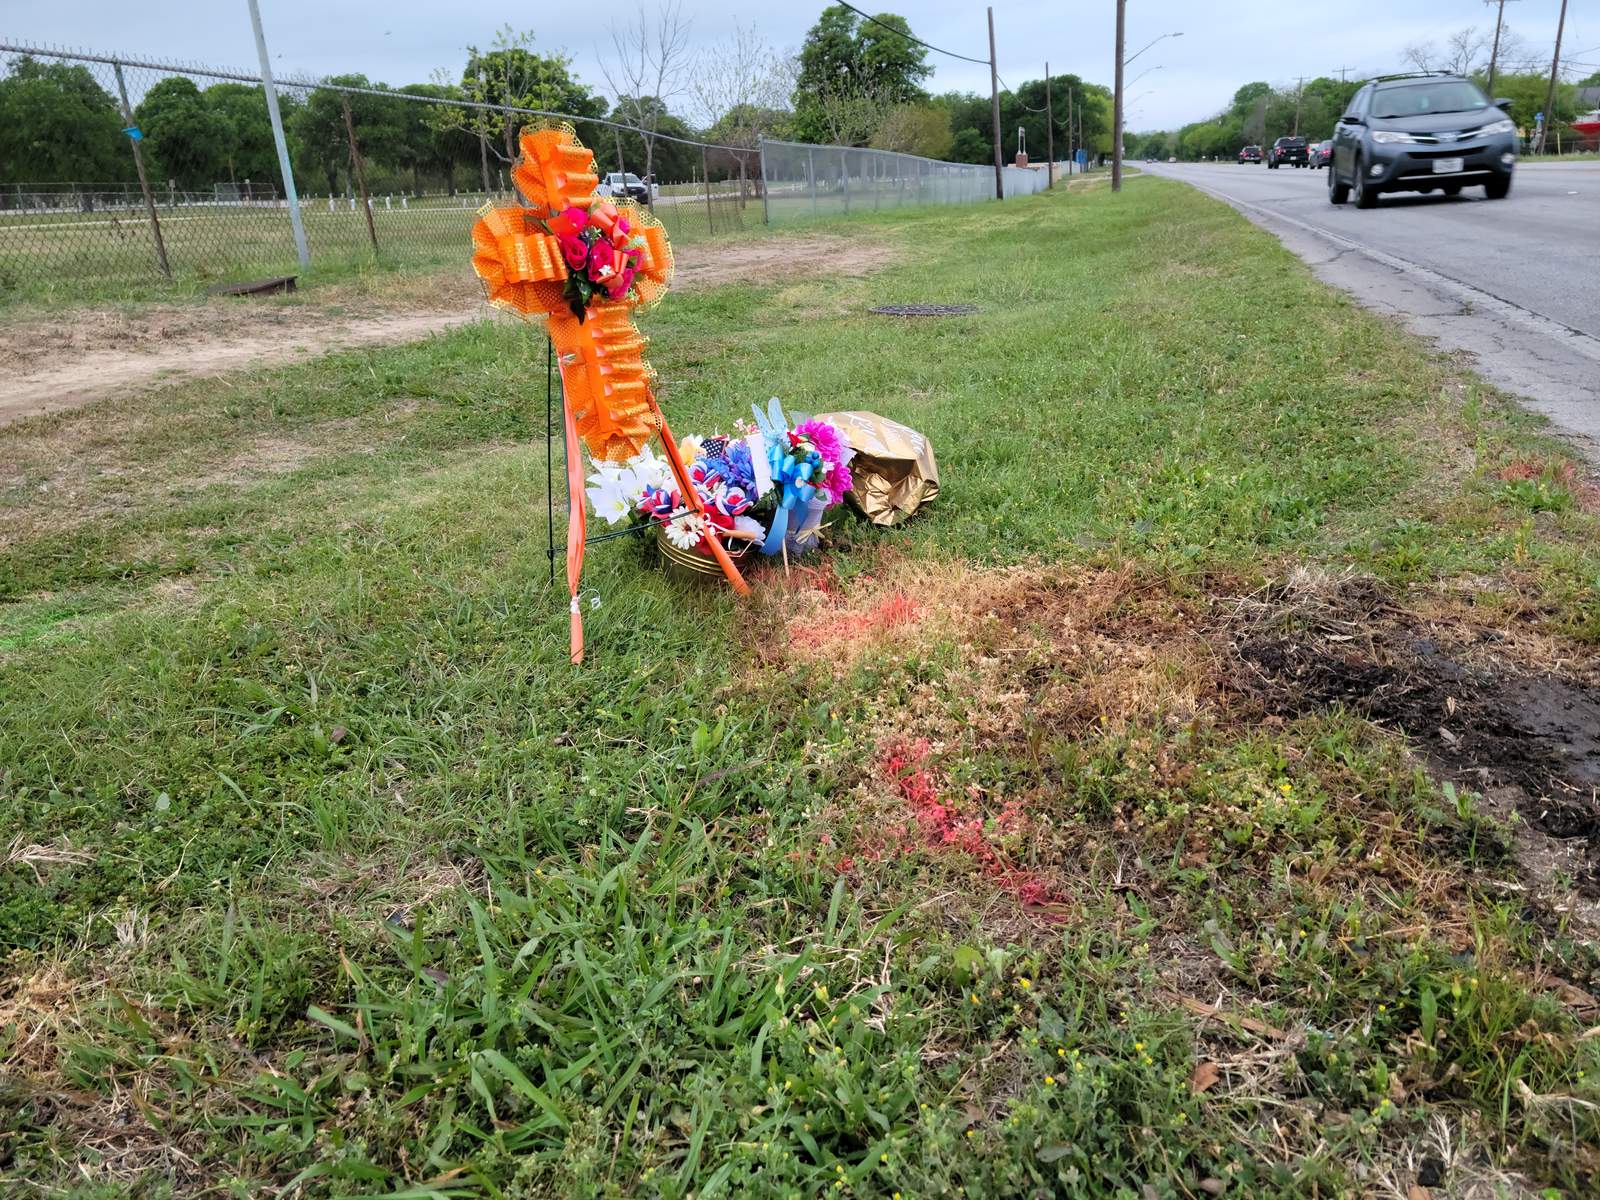 Memorial erected at crash site where man was killed, toddler injured